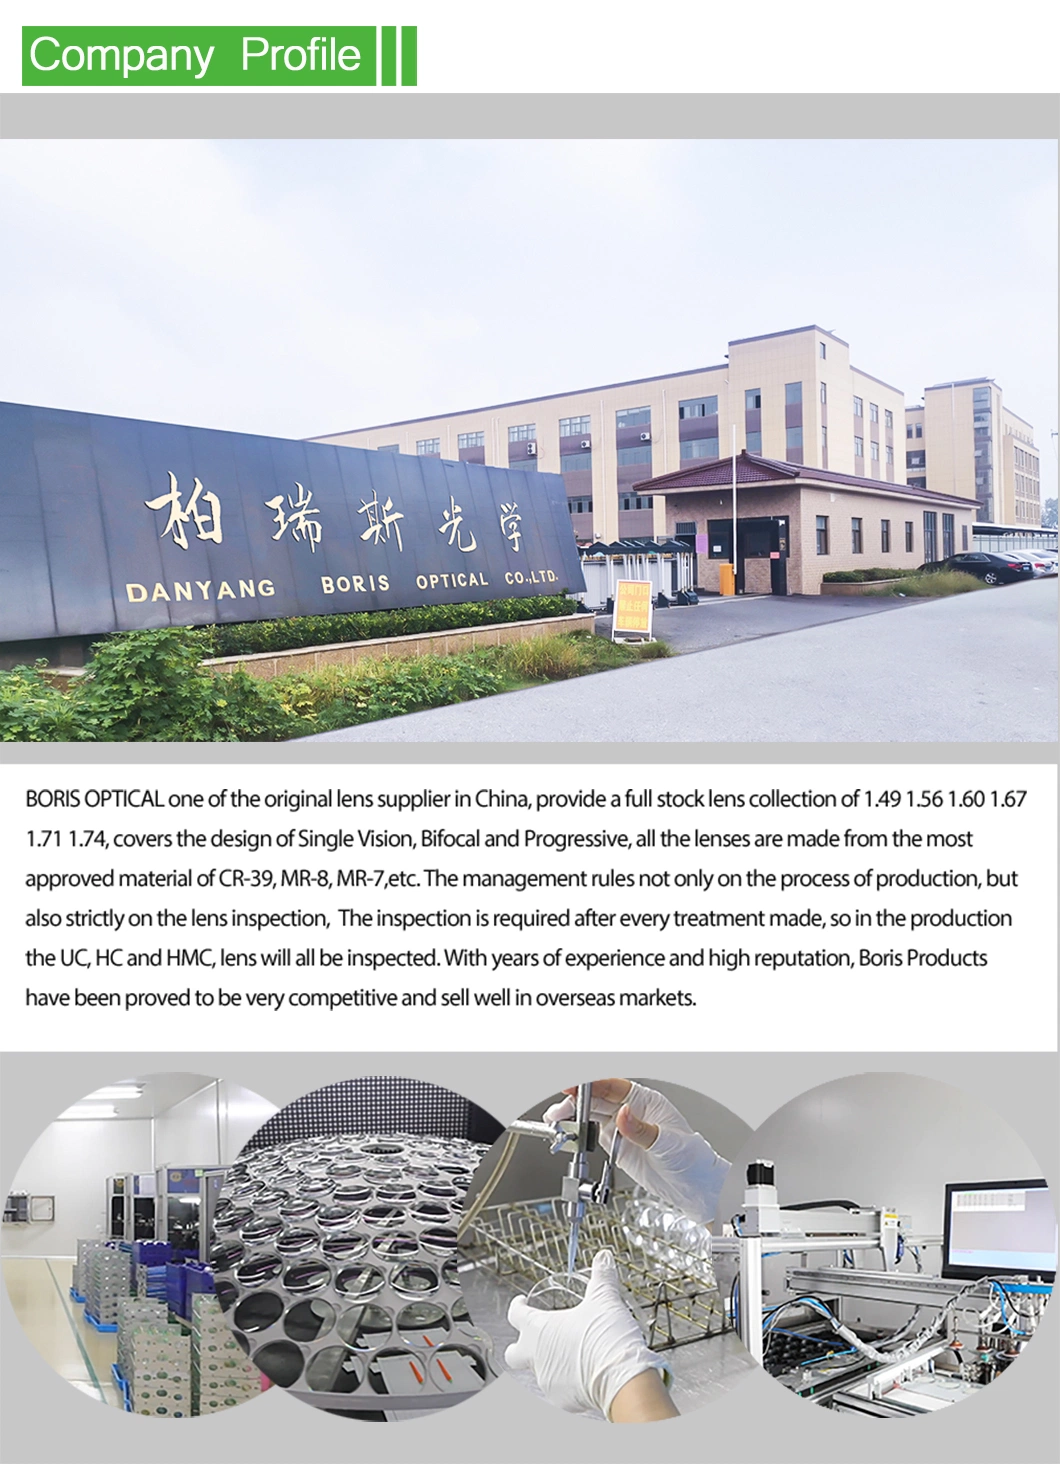 1.56 Photo Pink Hmc Optical Lenses China Manufacture